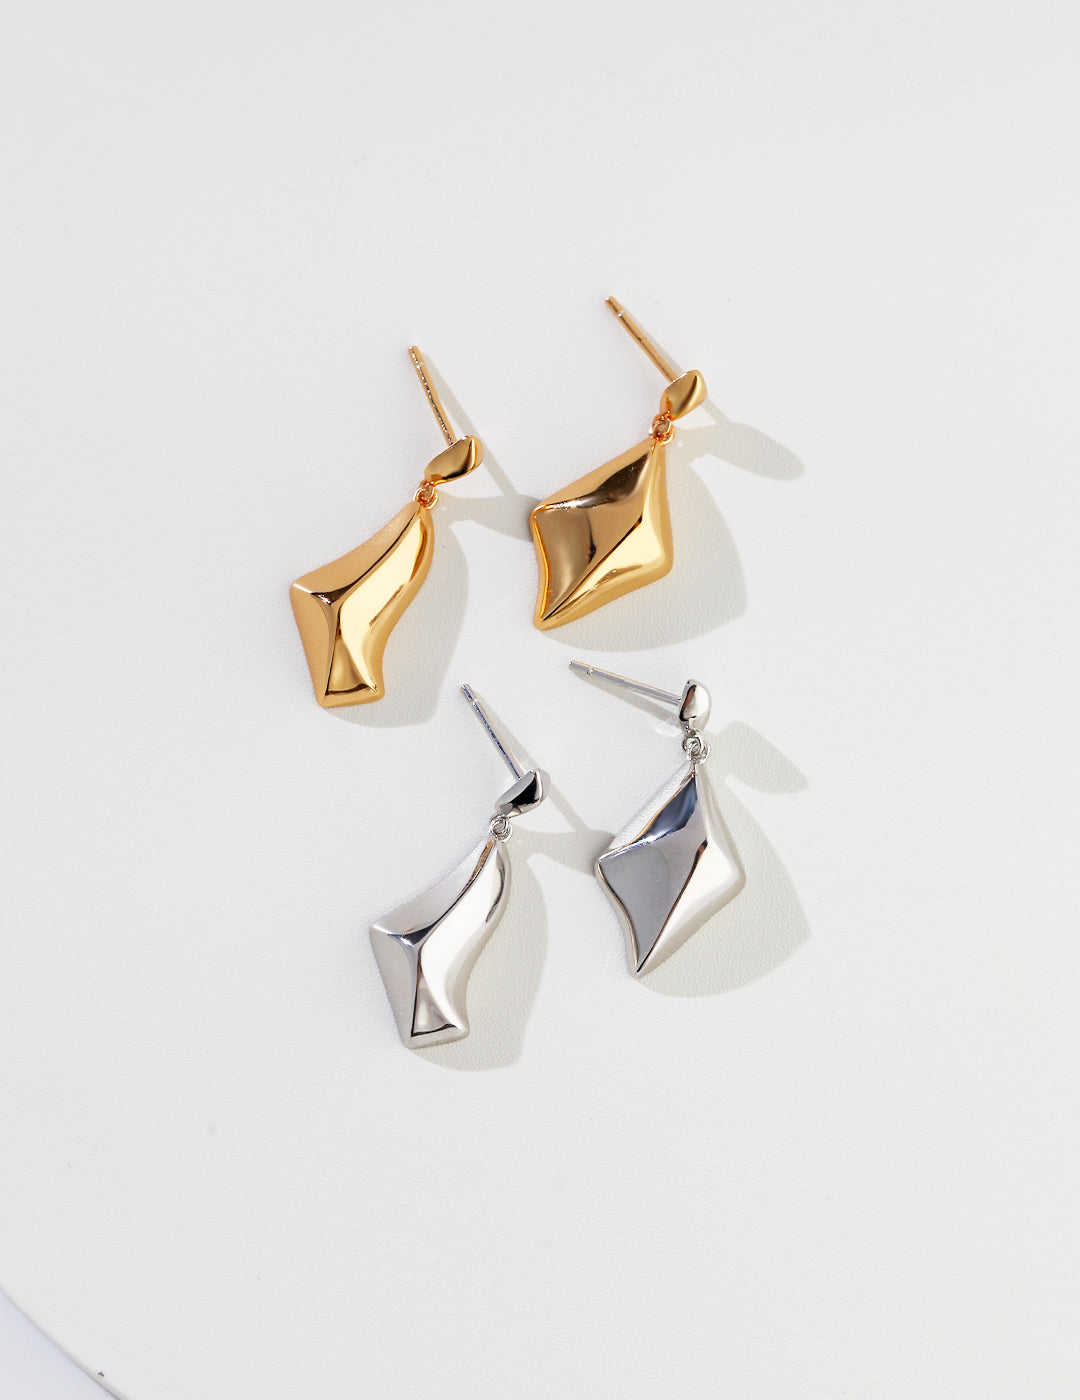 Irregular pyramid earrings, gold & silver